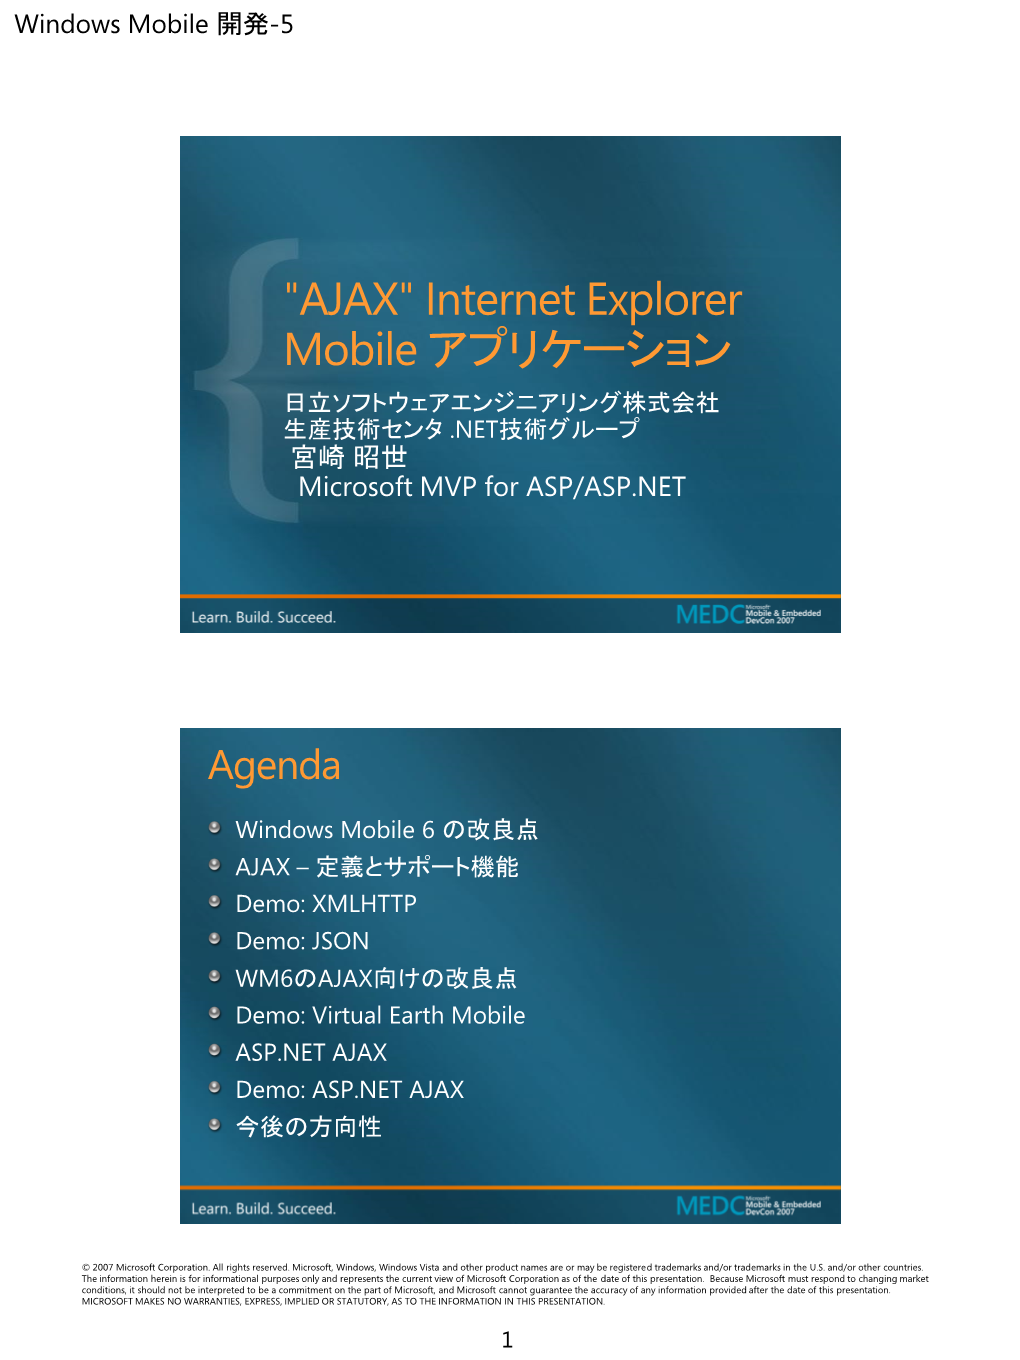 "AJAX" Internet Explorer Mobile アプリケーション 日立ソフトウェアエンジニアリング株式会社 生産技術センタ .NET技術グループ 宮崎 昭世 Microsoft MVP for ASP/ASP.NET